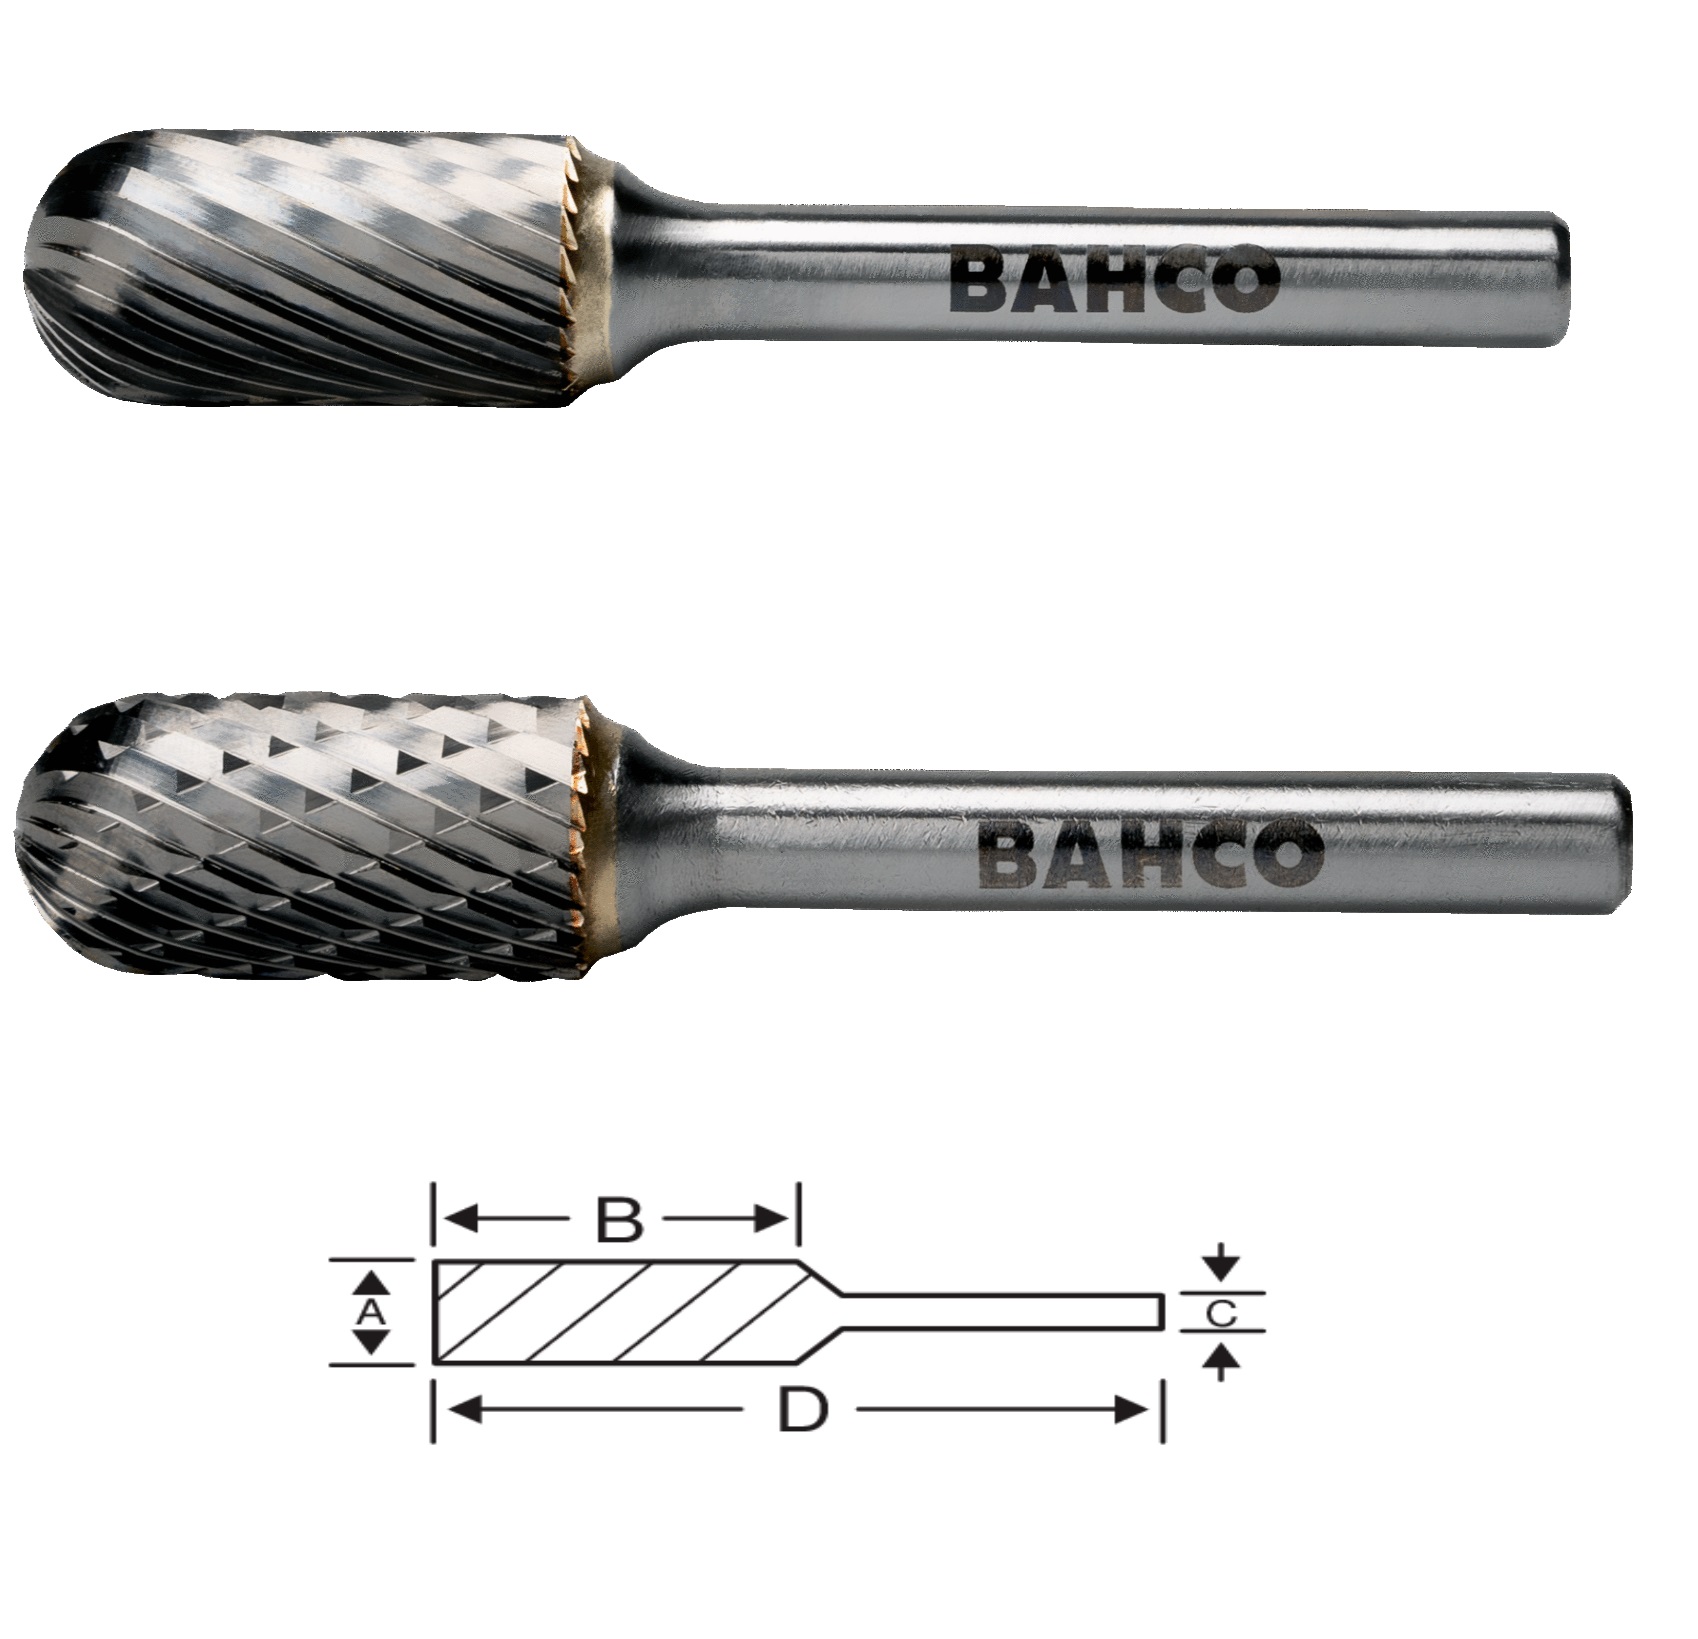 Bahco-Cylindrical Rotary Burrs-MBS